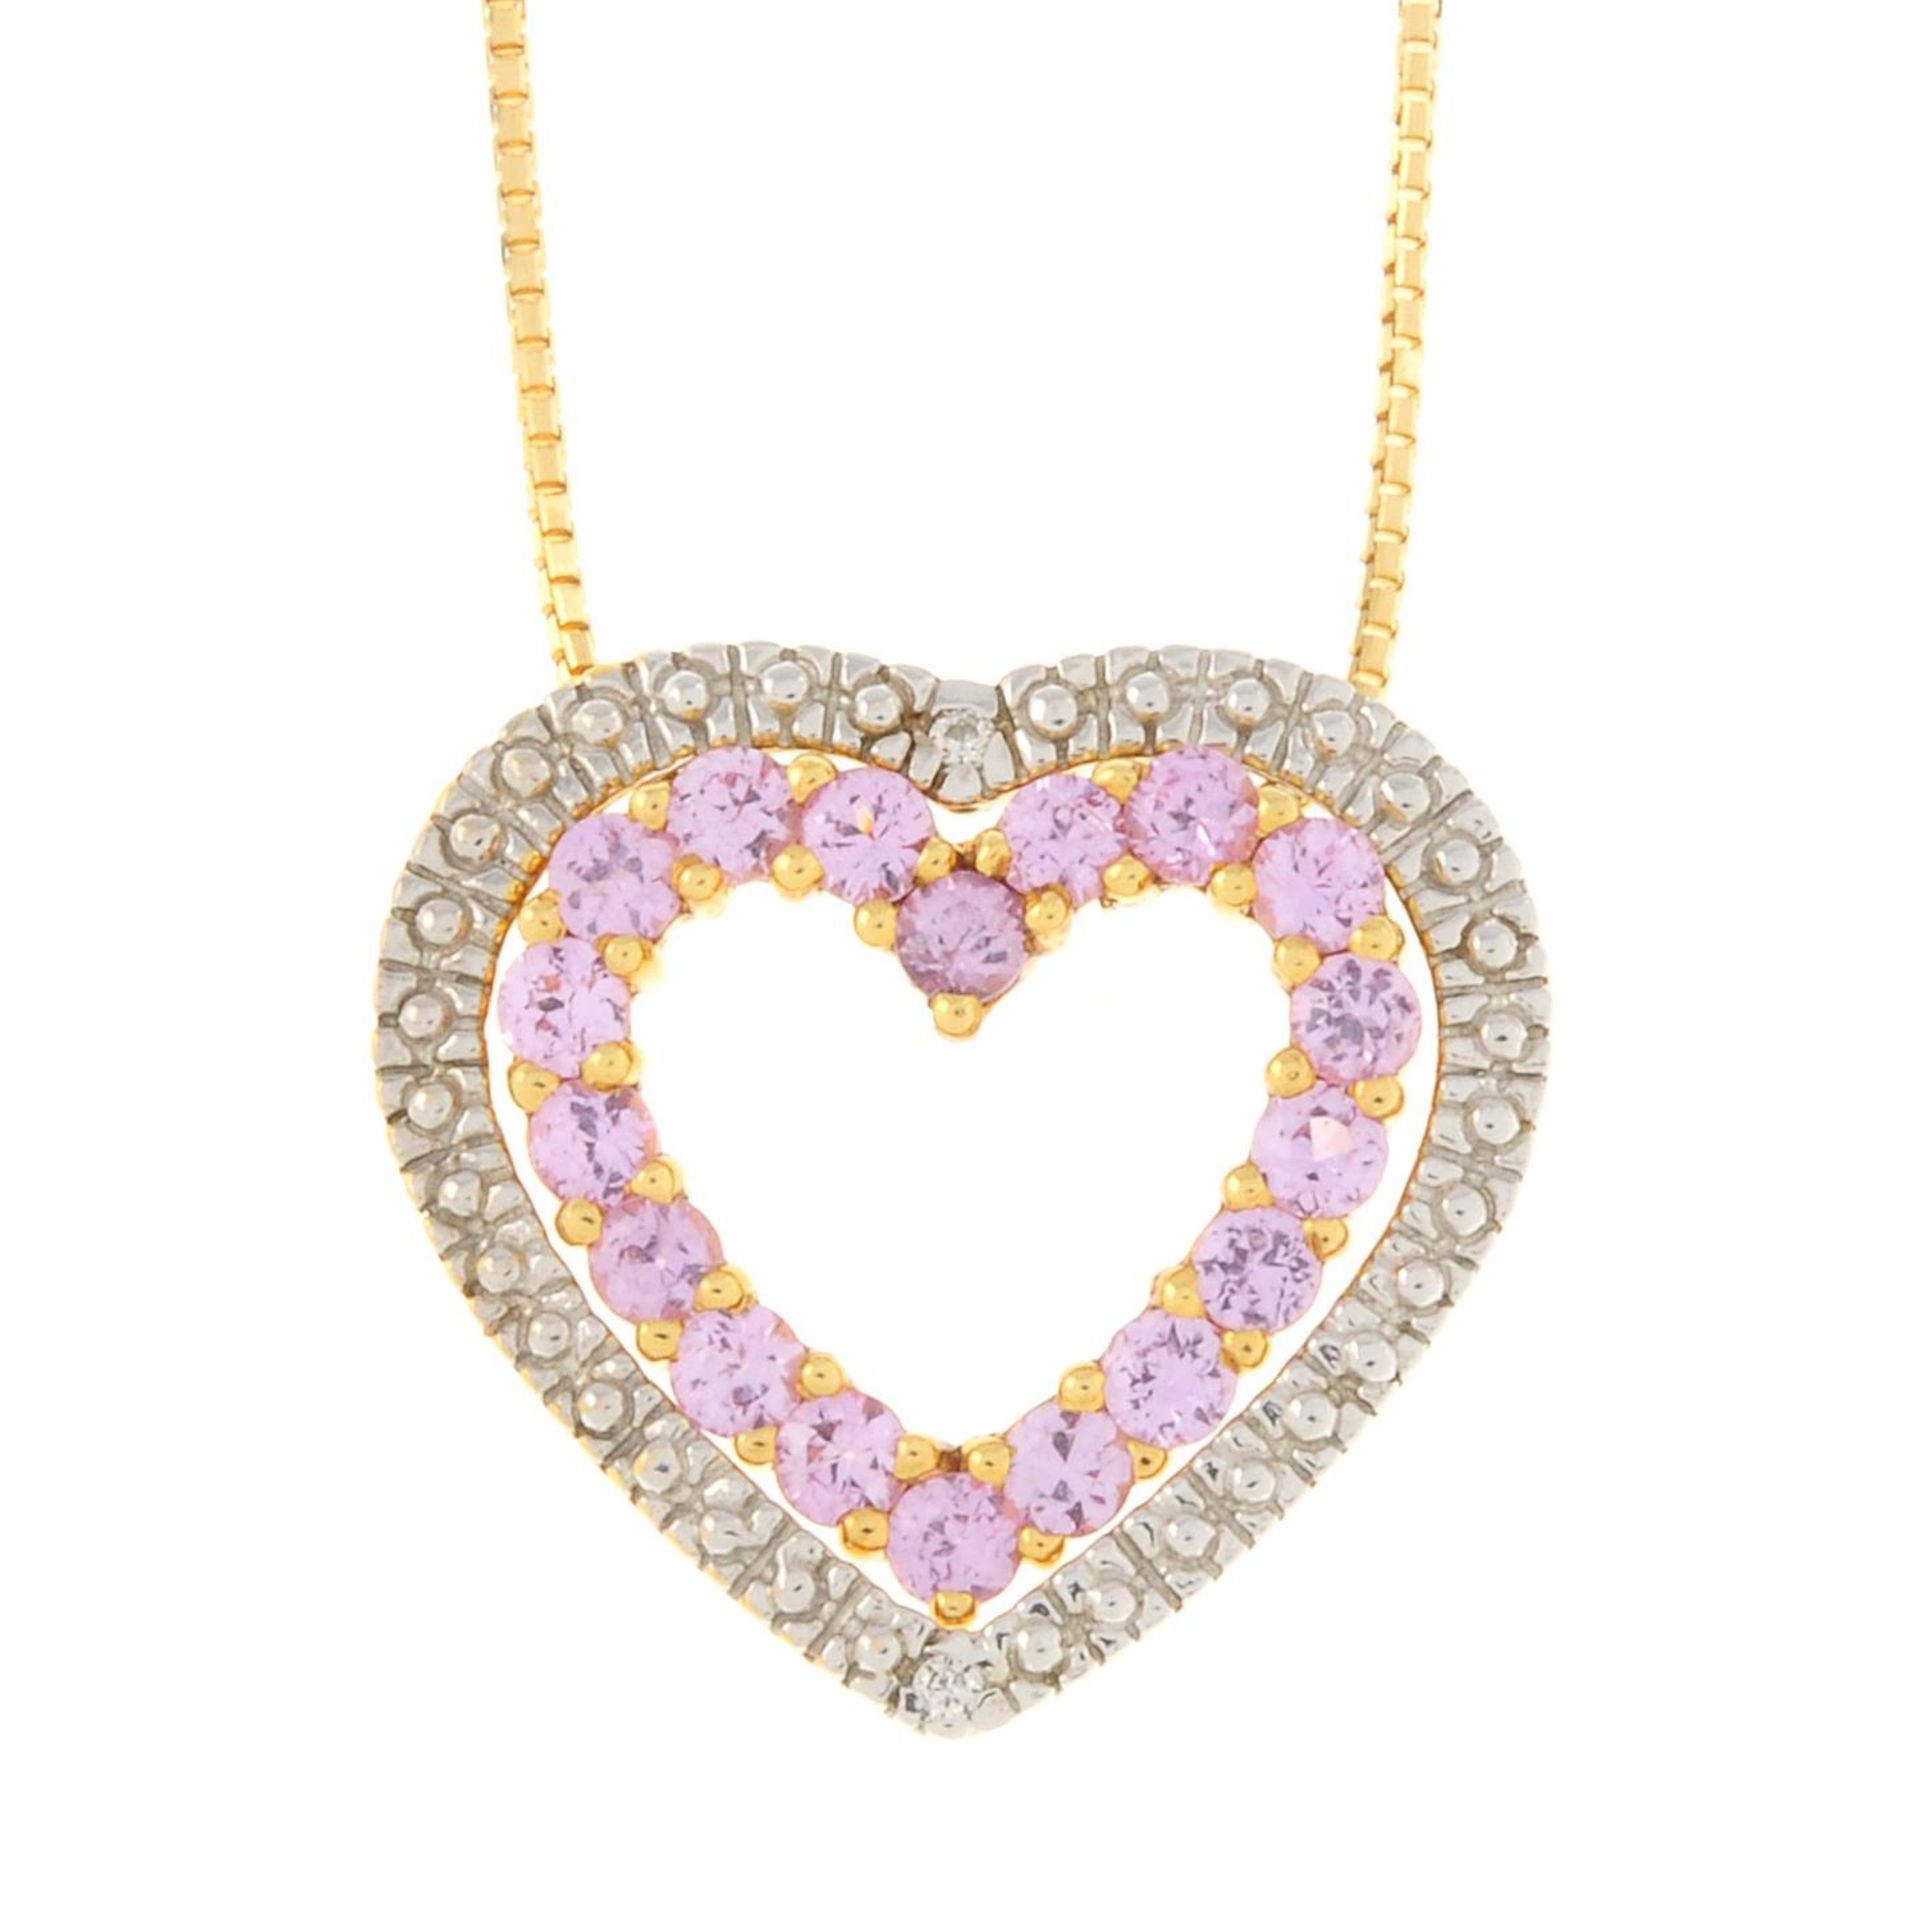 A pink sapphire and brilliant-cut diamond heart pendant,